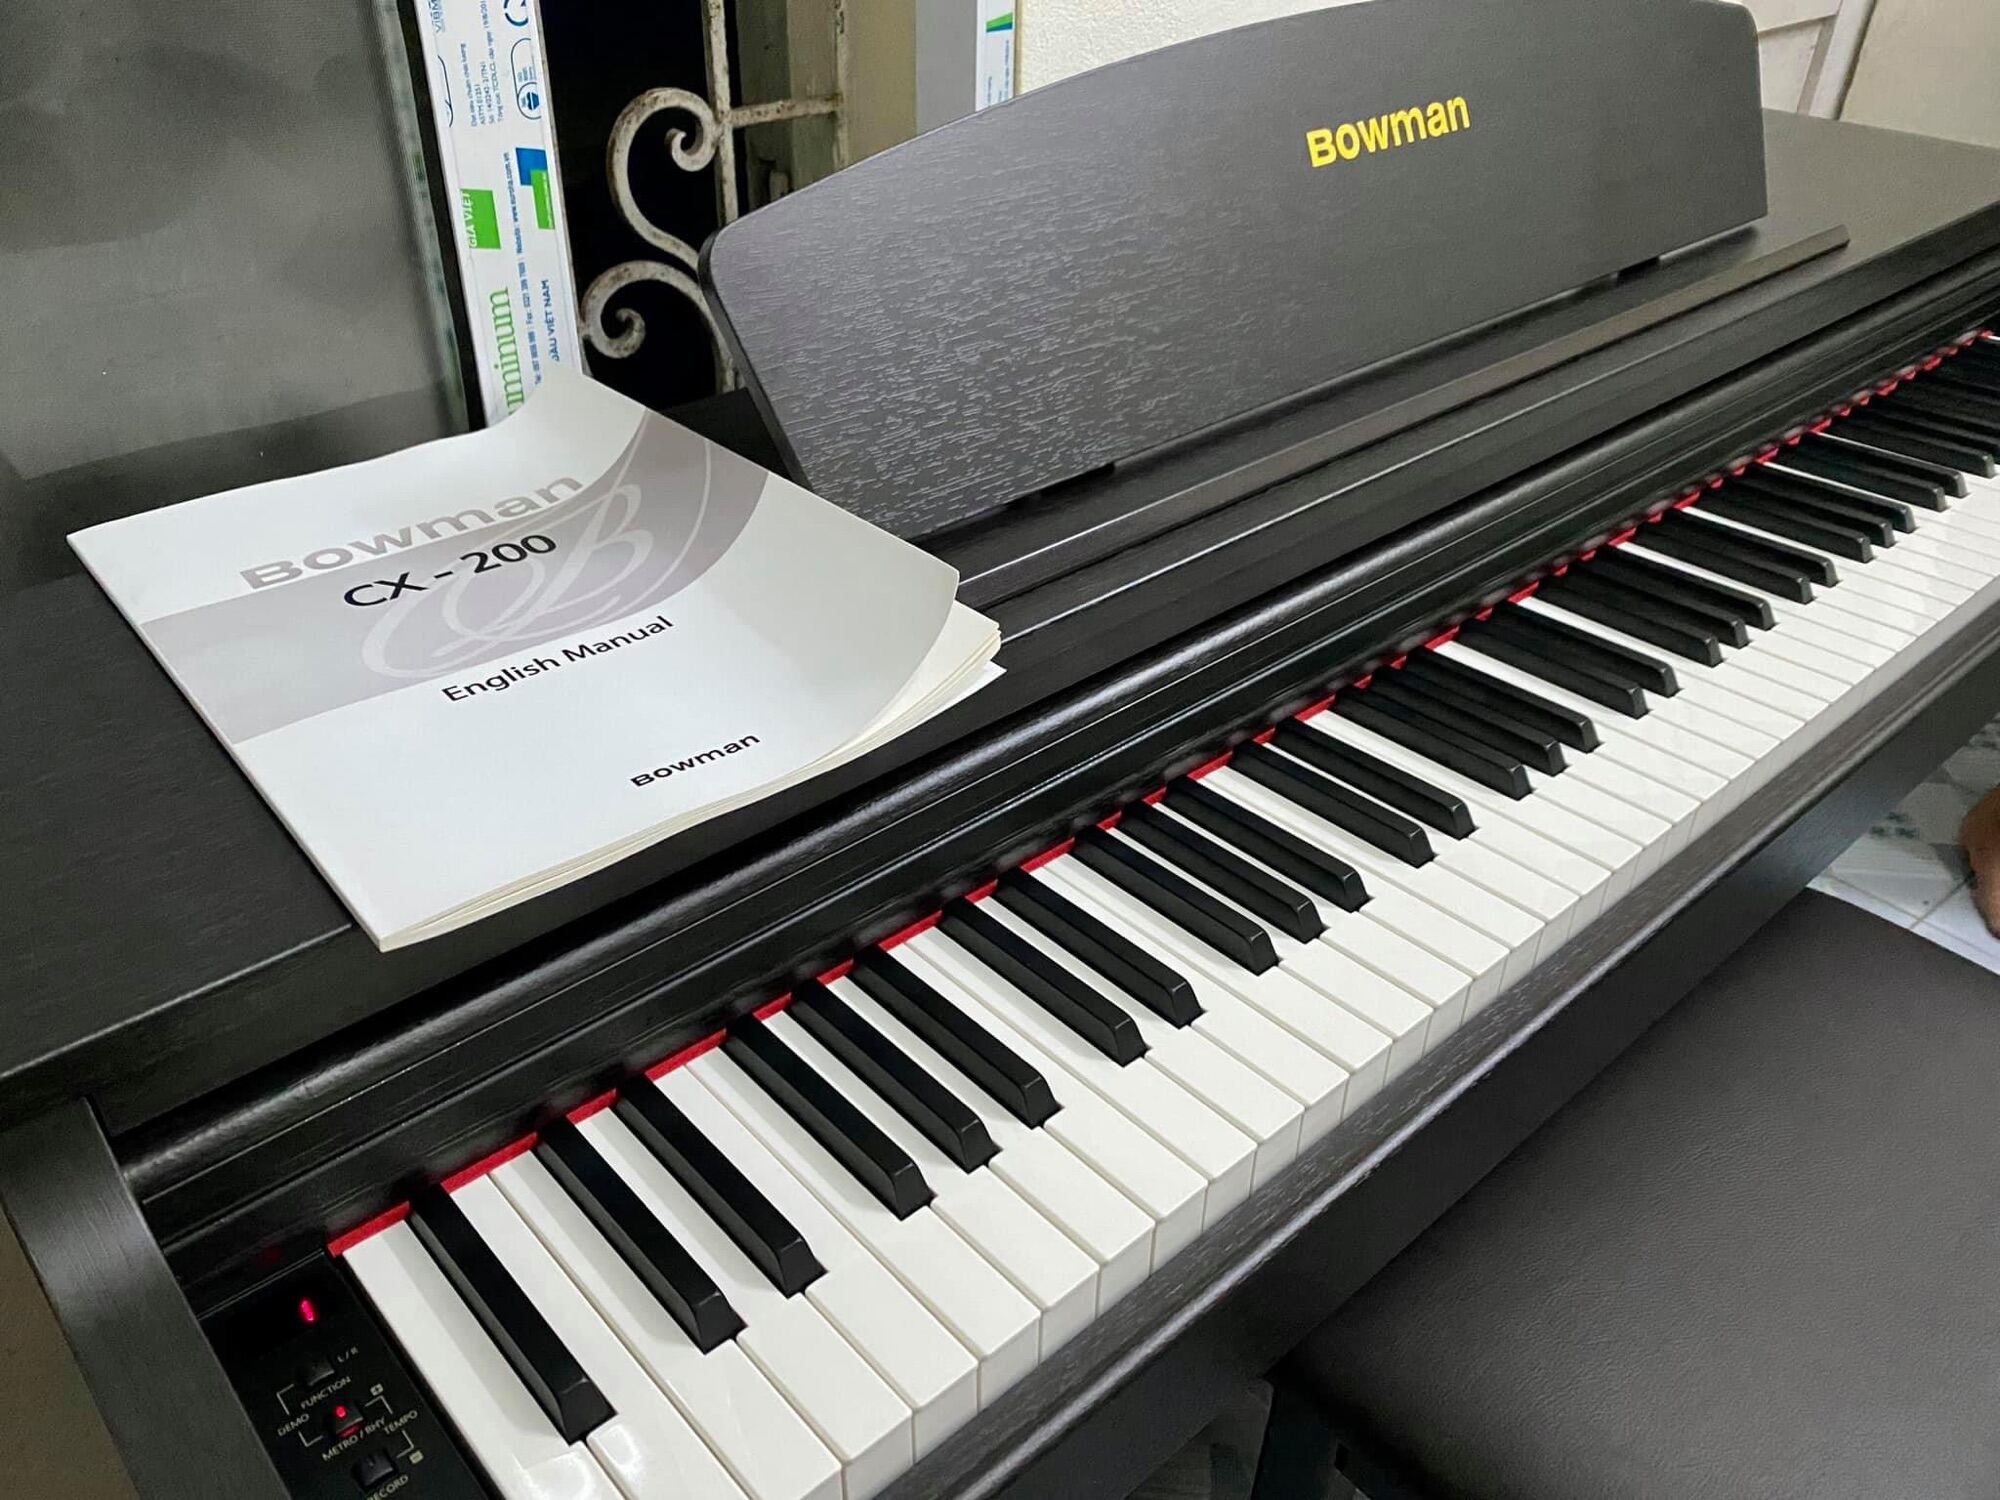 Bowman cx200 piano digital from korea